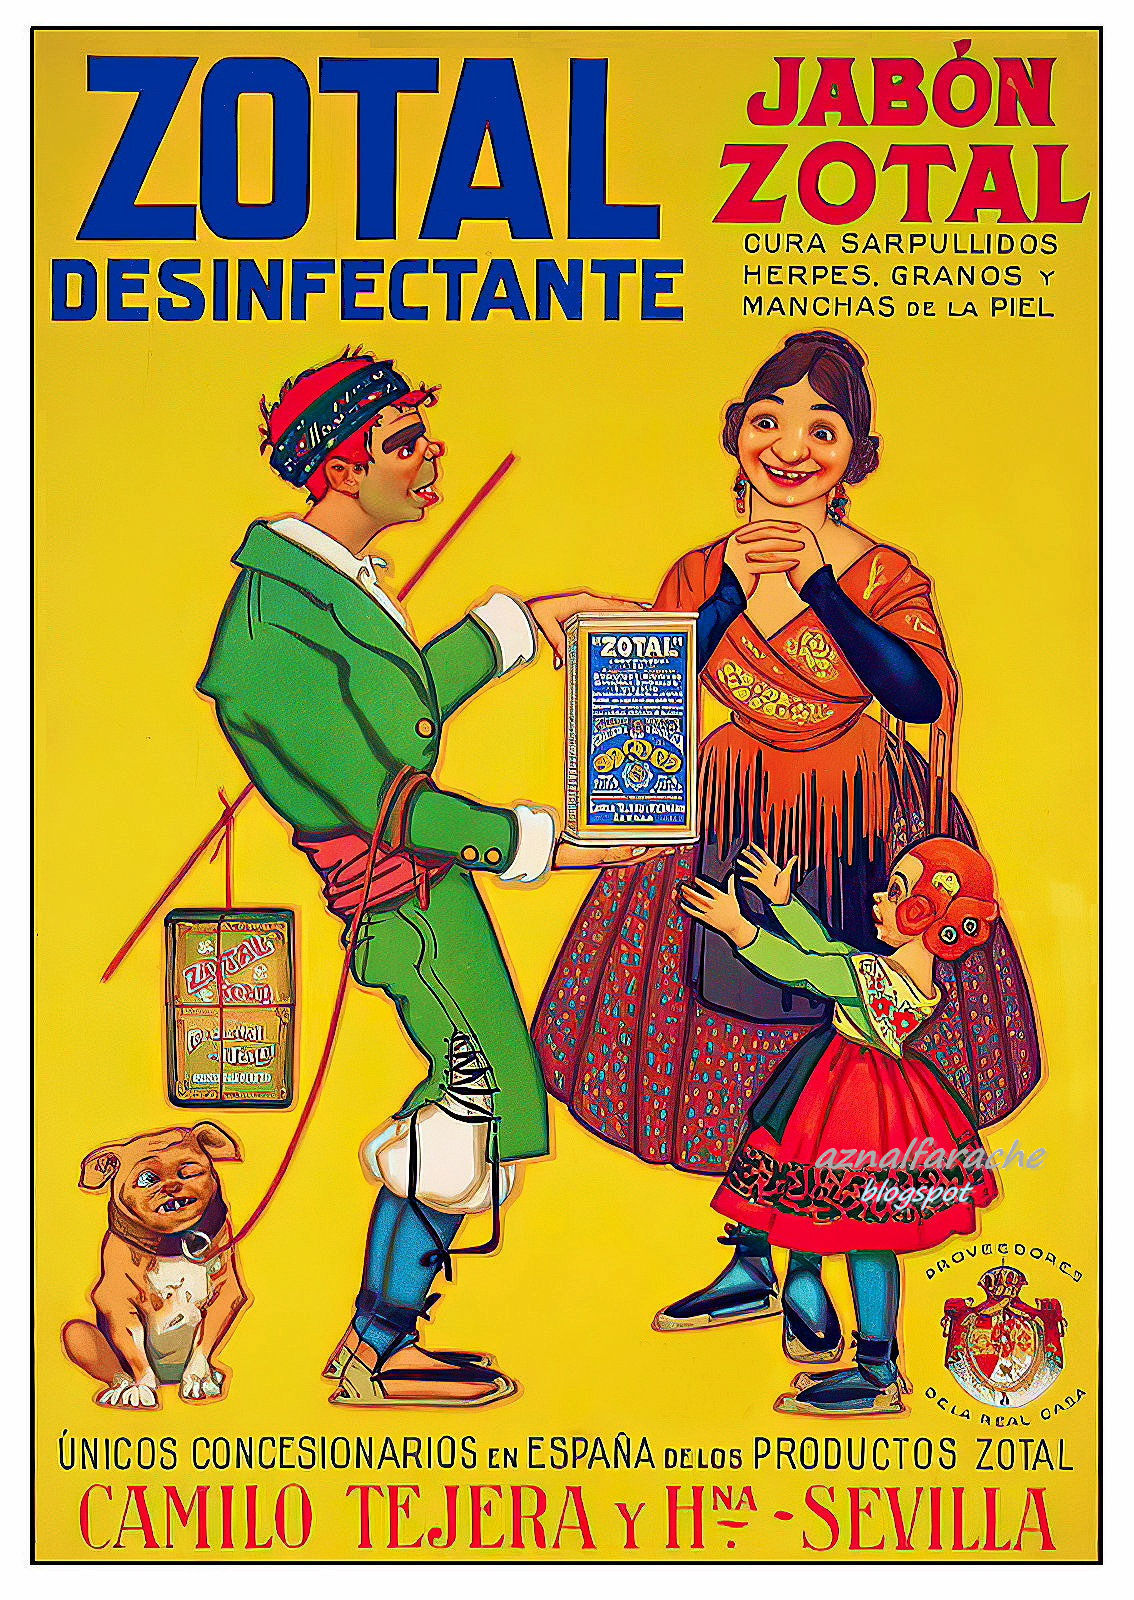 aznalfarache: Publicidad 1925 - ZOTAL Desinfectante (Sevilla)